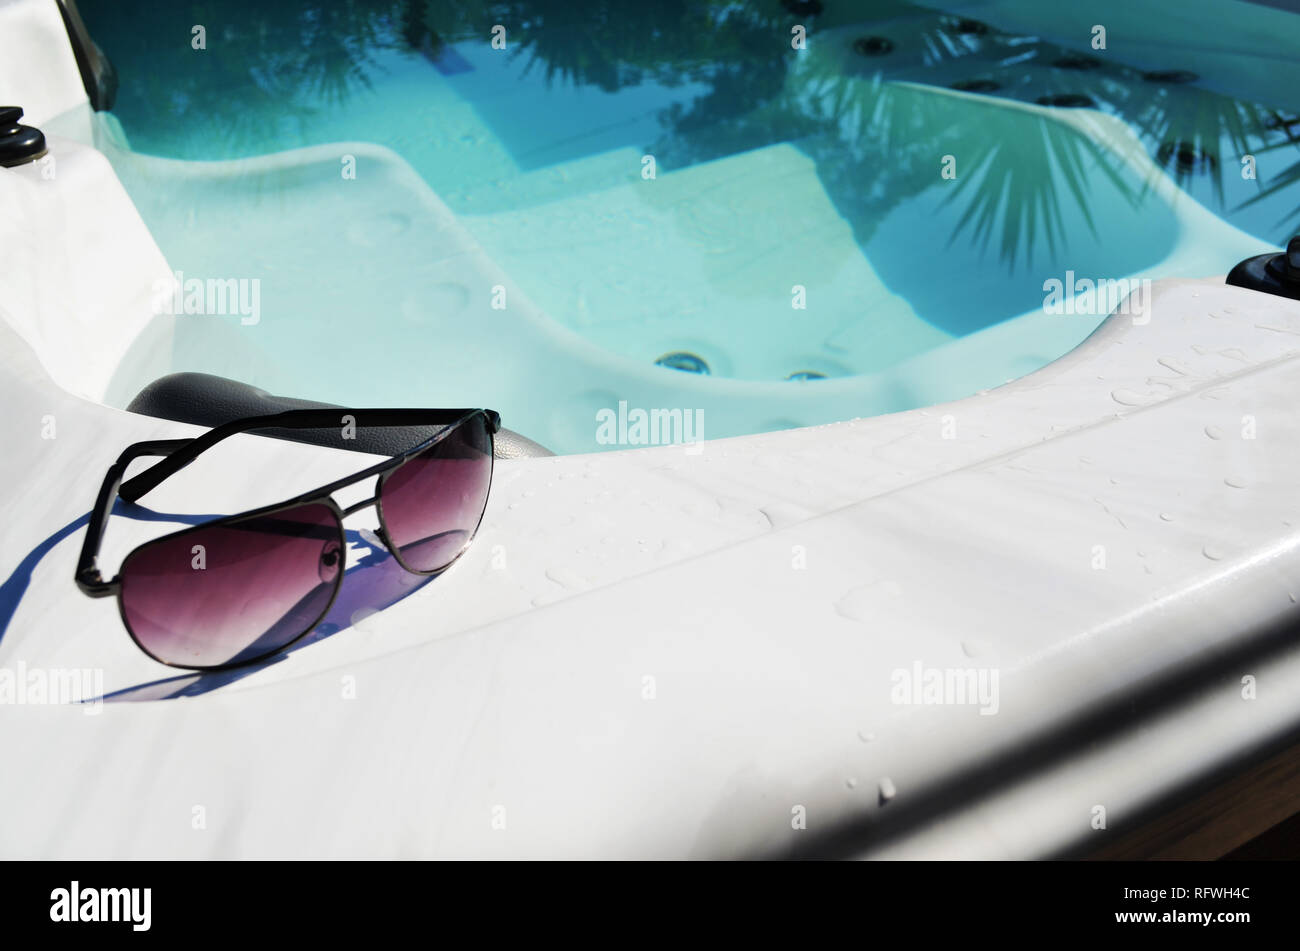 Swim spa with sunglasses Stock Photo